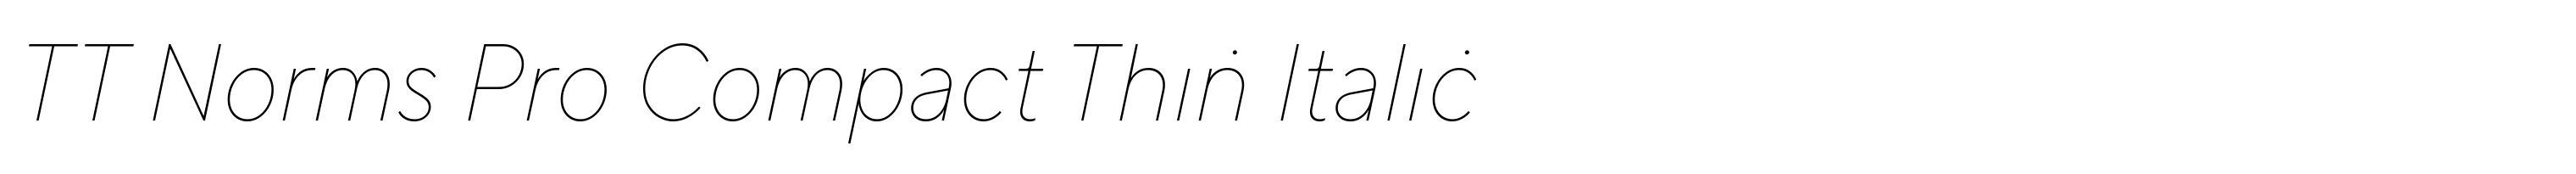 TT Norms Pro Compact Thin Italic